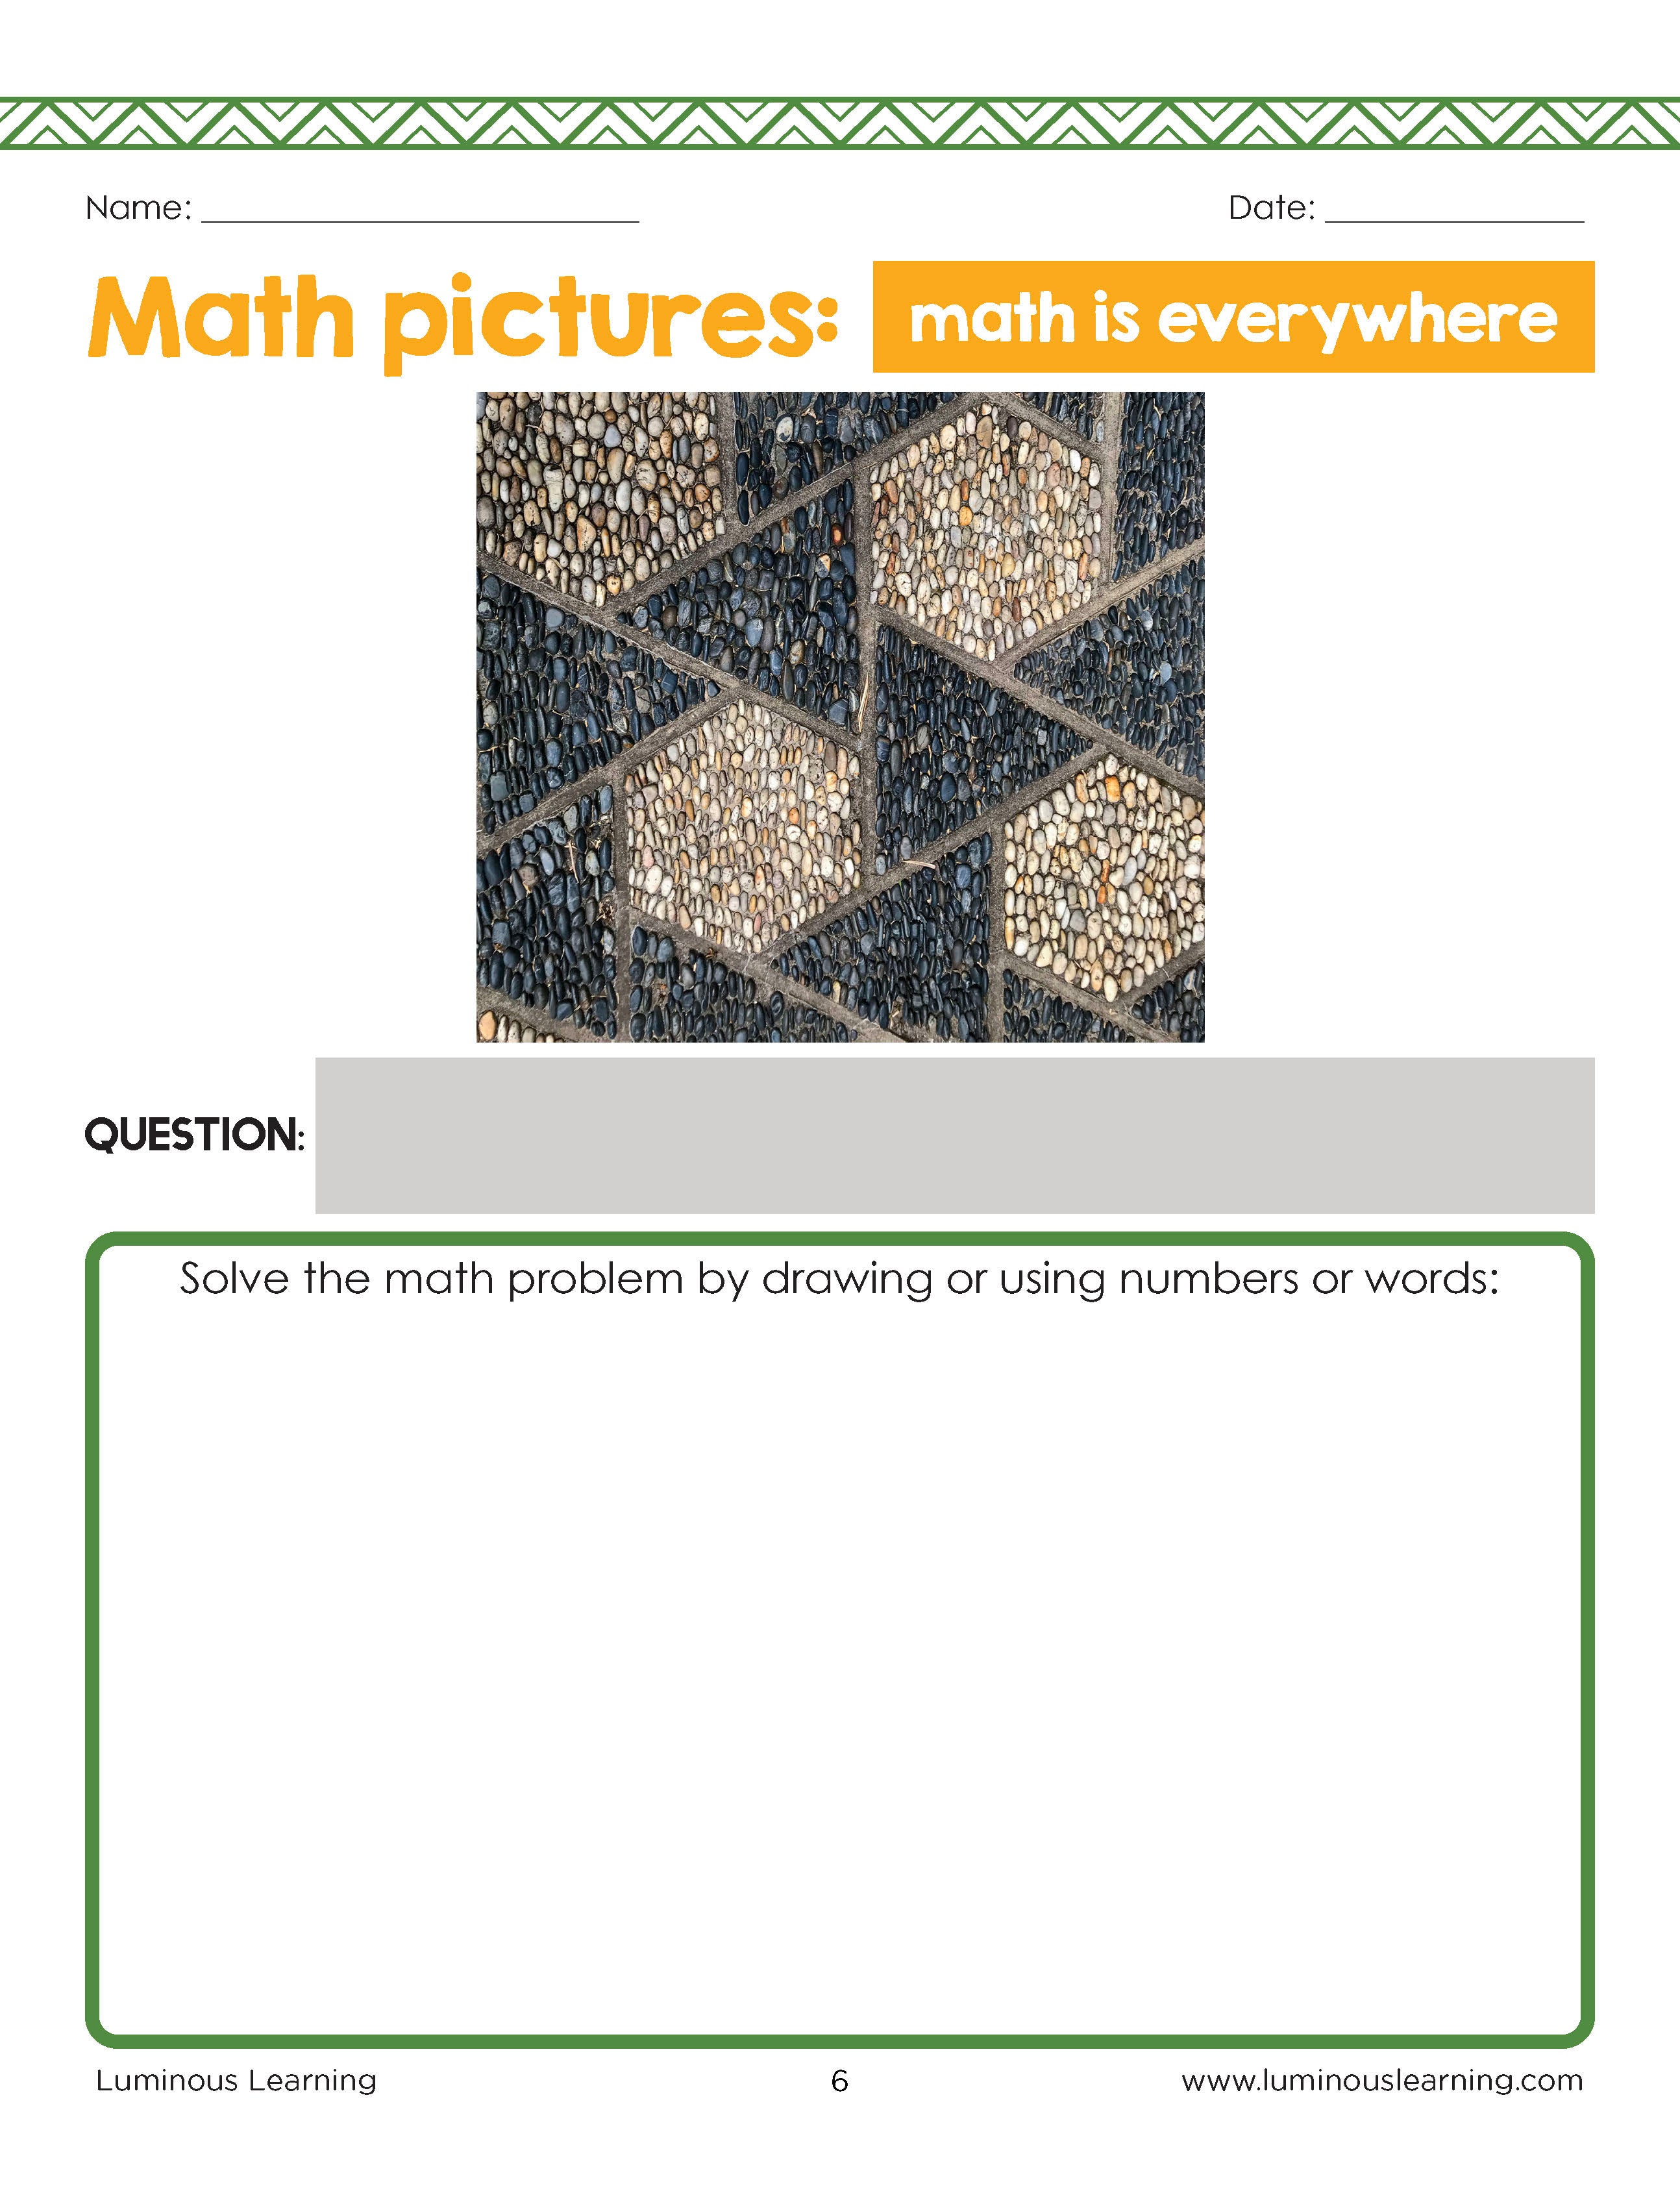 "Math is Everywhere" Workbook for Grades K - 2